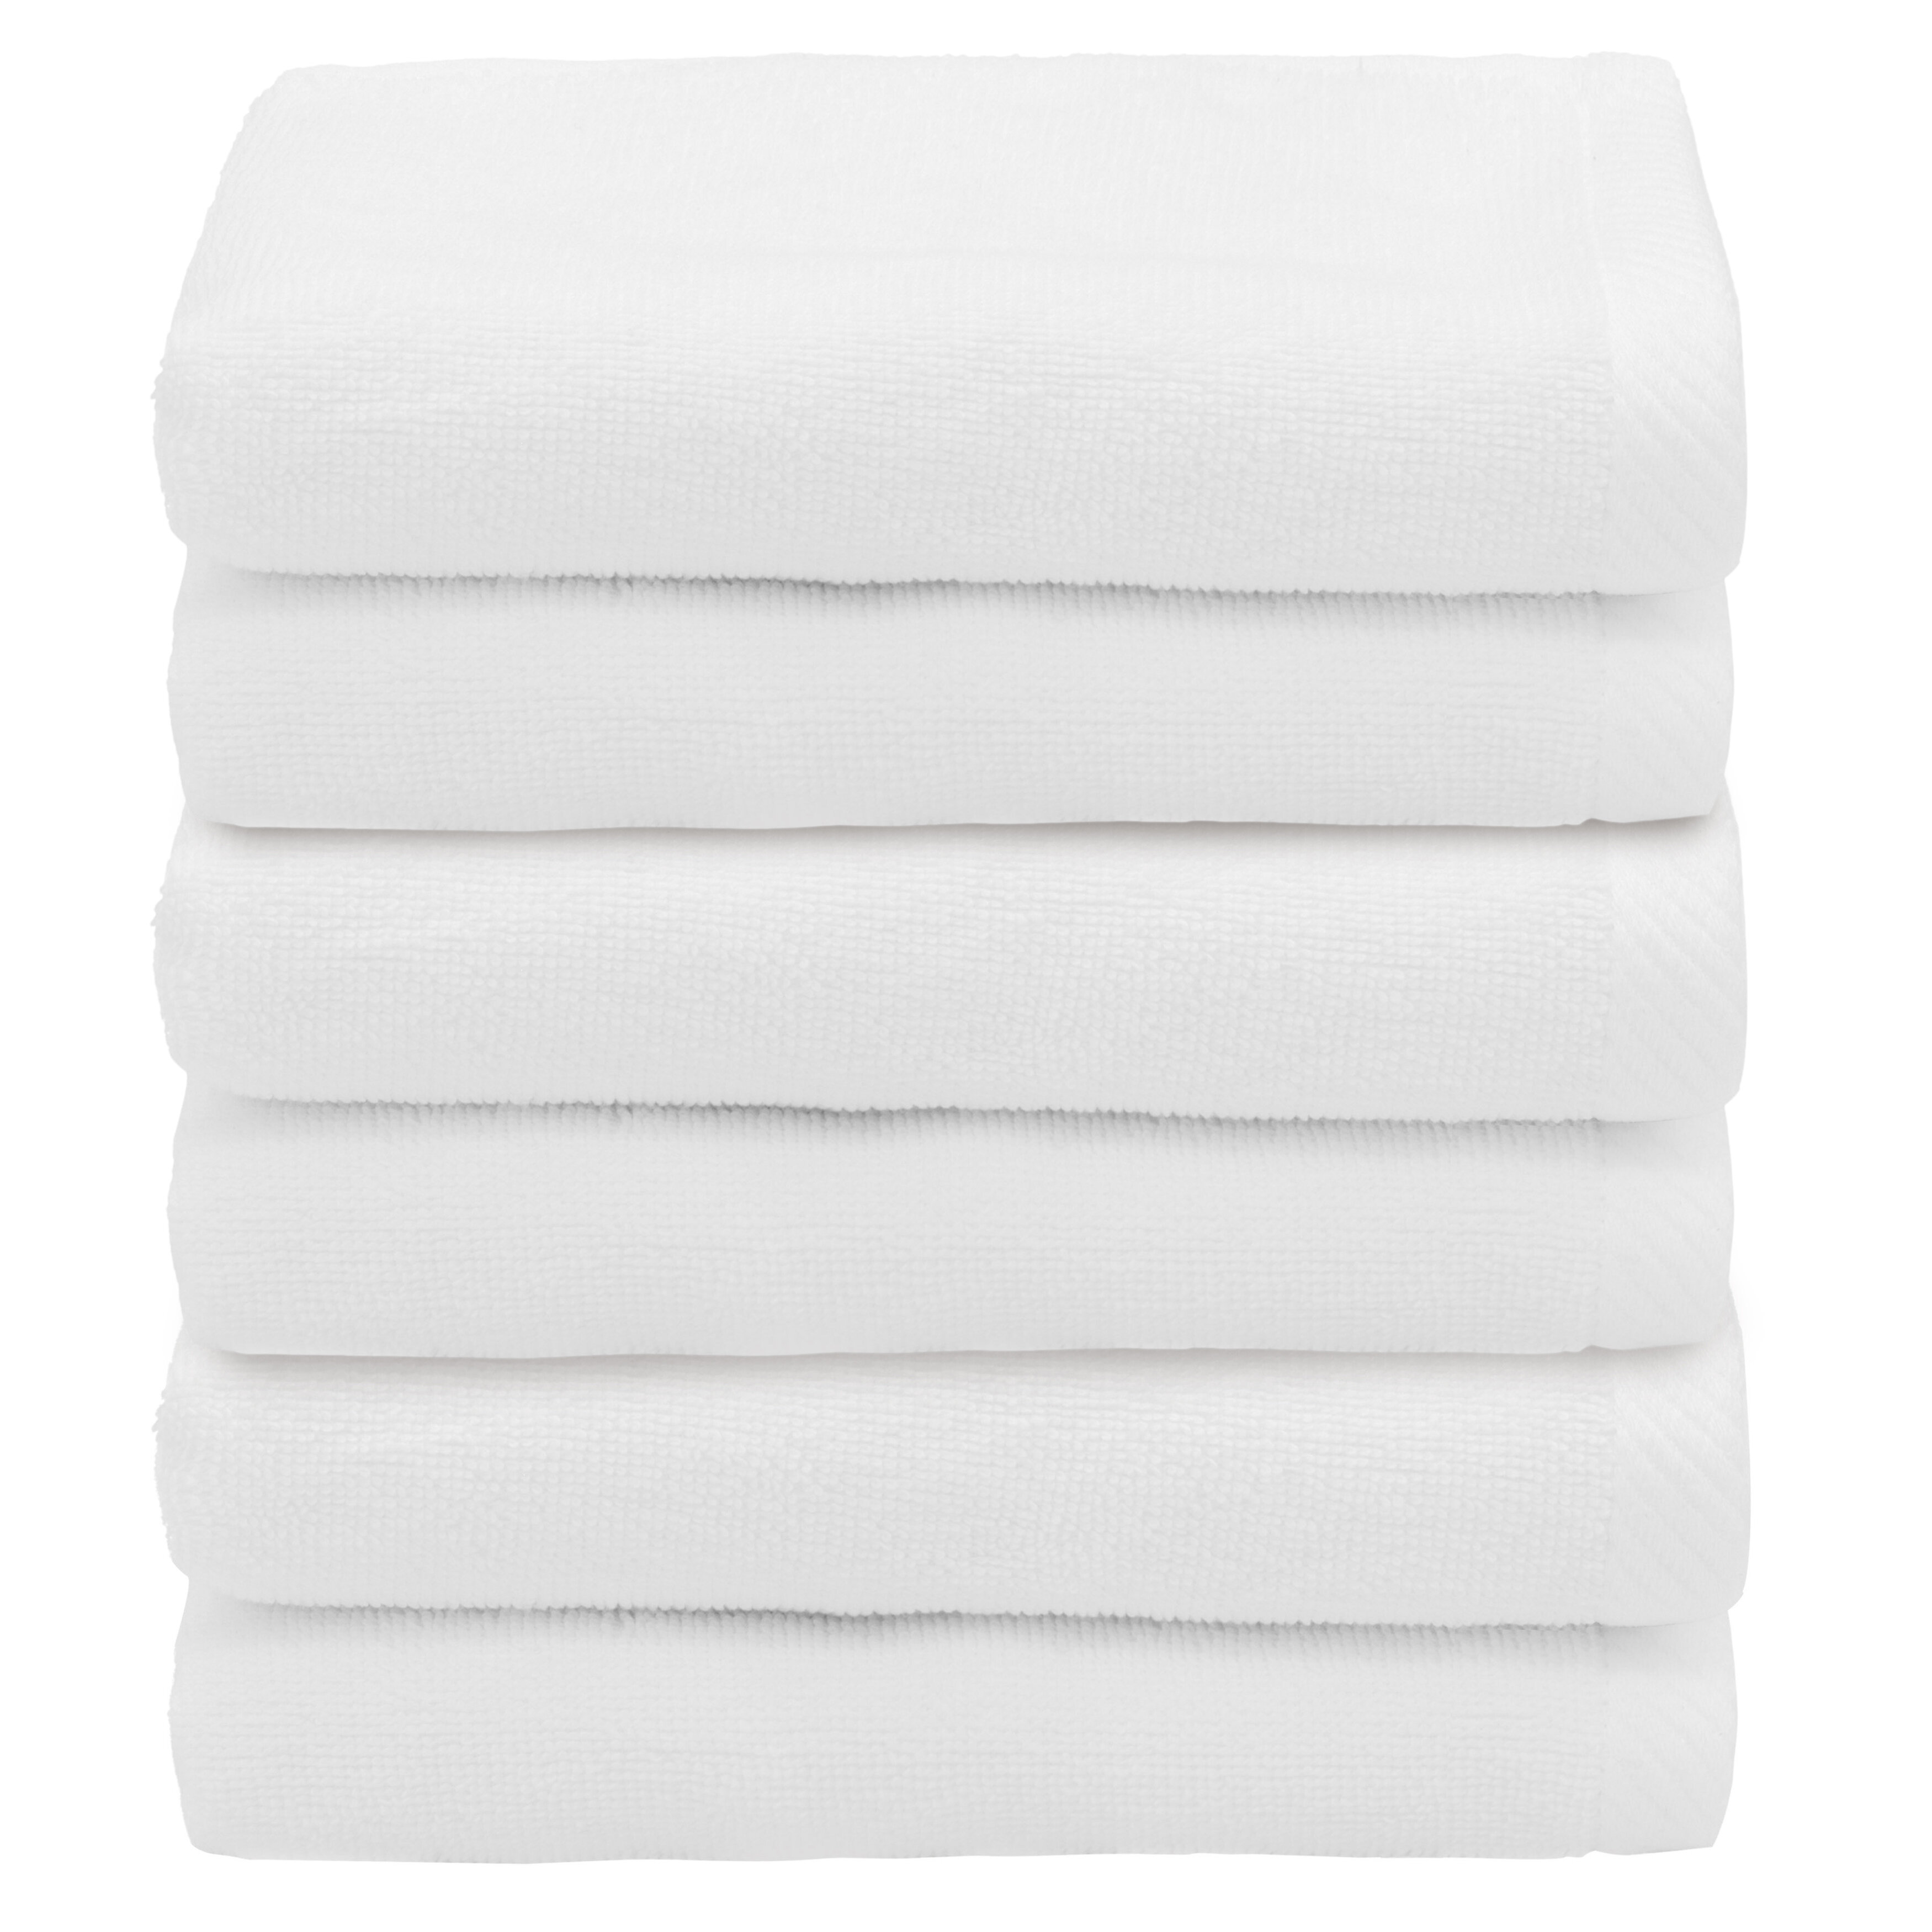 DKNY Cotton Bath Towels & Reviews - Wayfair Canada